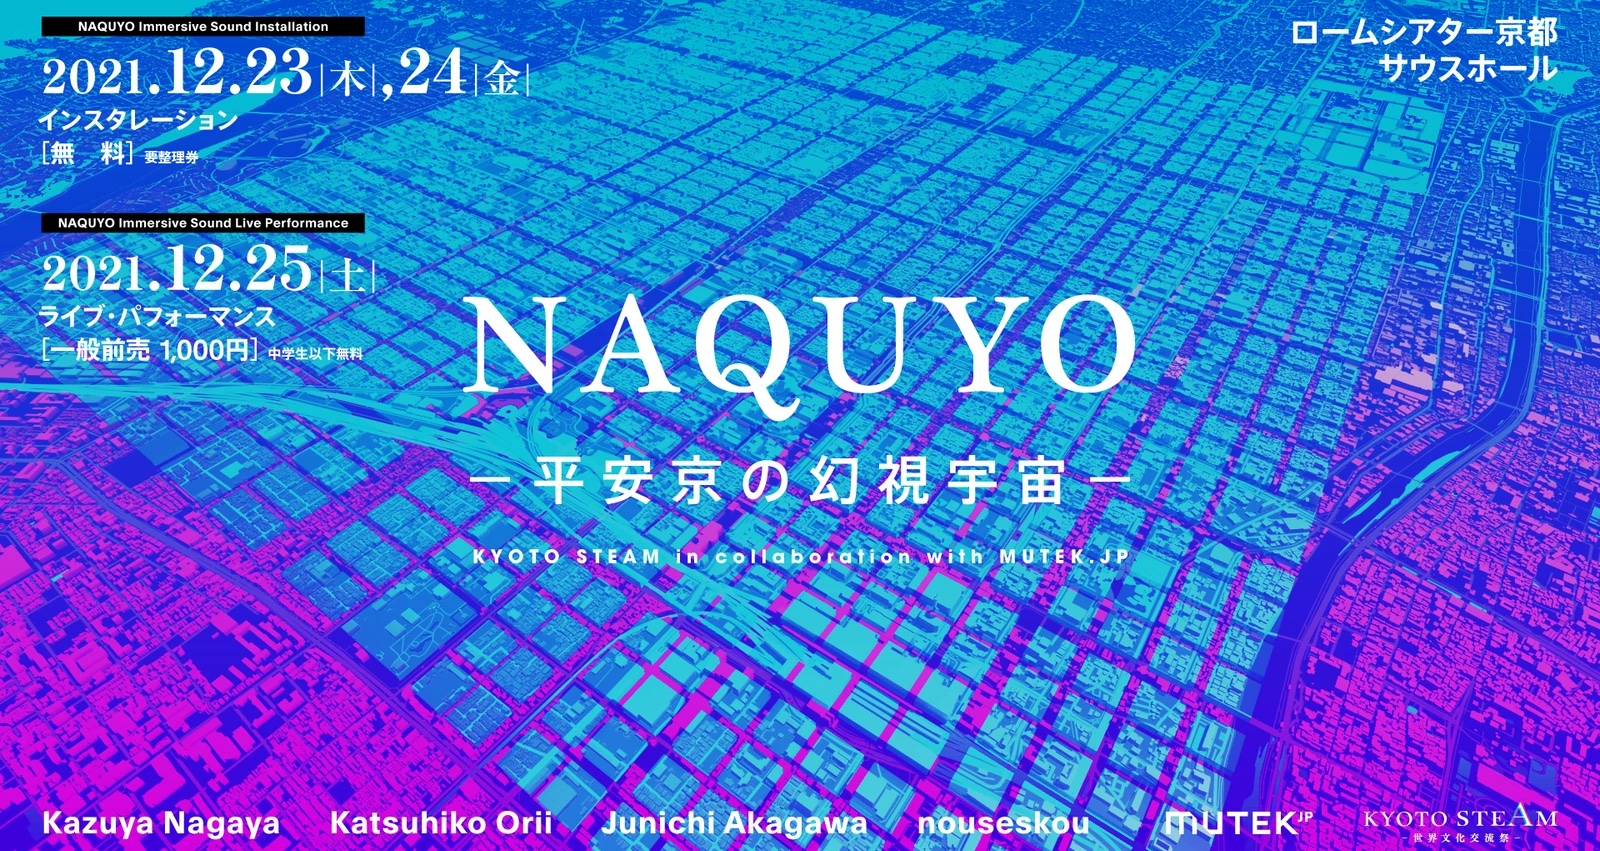 「NAQUYO Immersive Sound Live Performance」&「NAQUYO Immersive Sound Installation」